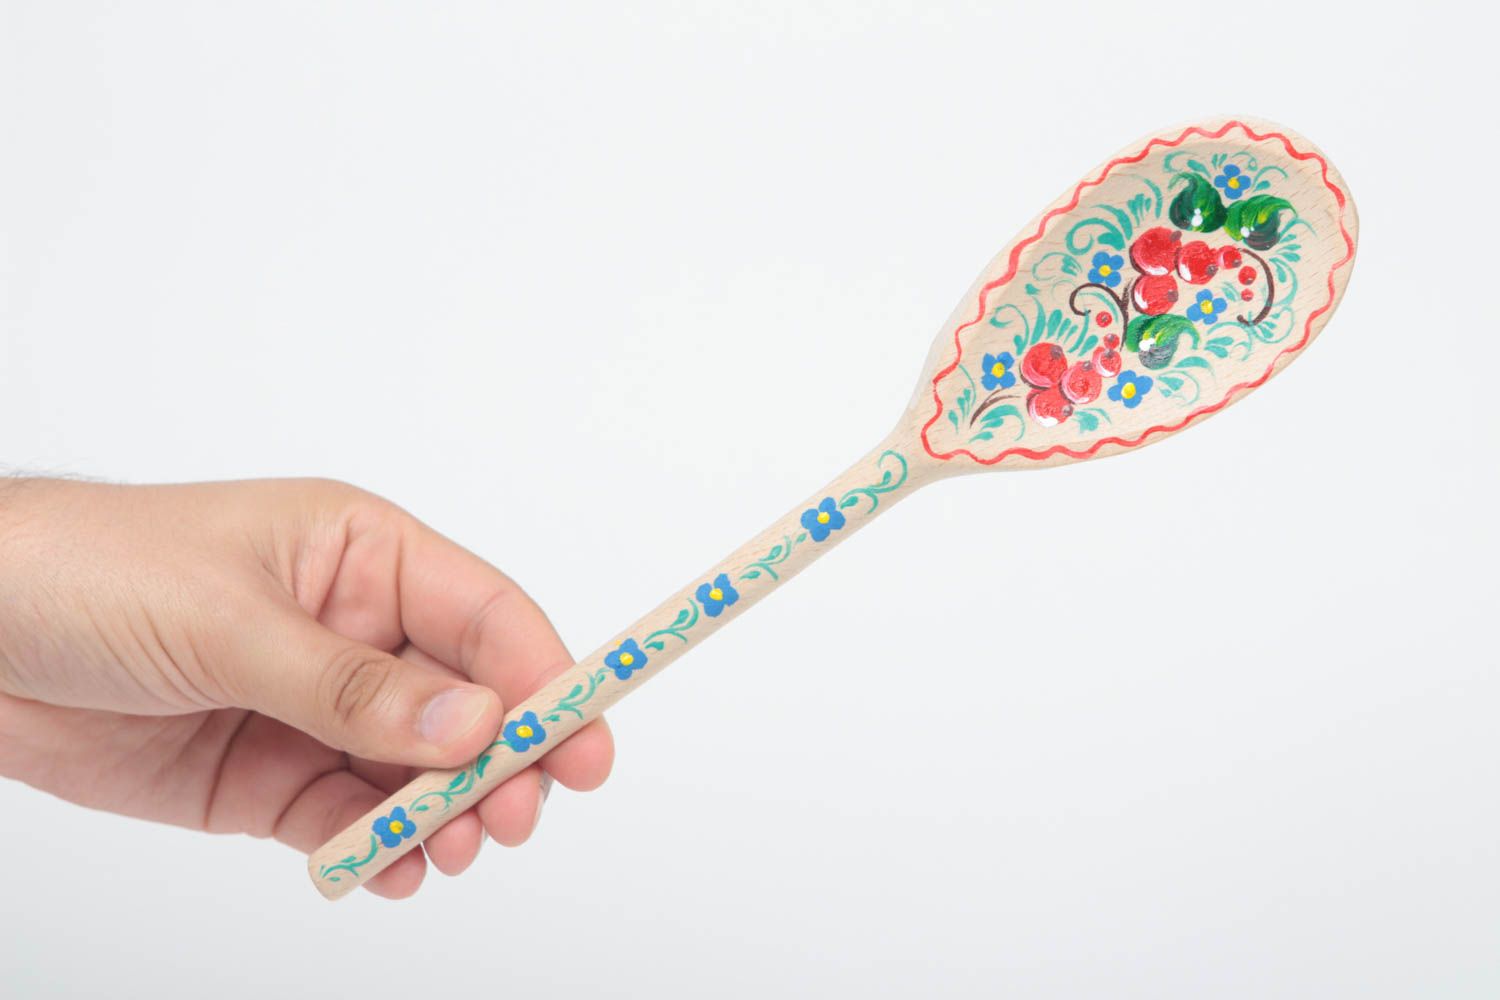 Handmade spoon unusual gift decorating ideas kitchen accessories wooden cutlery photo 5